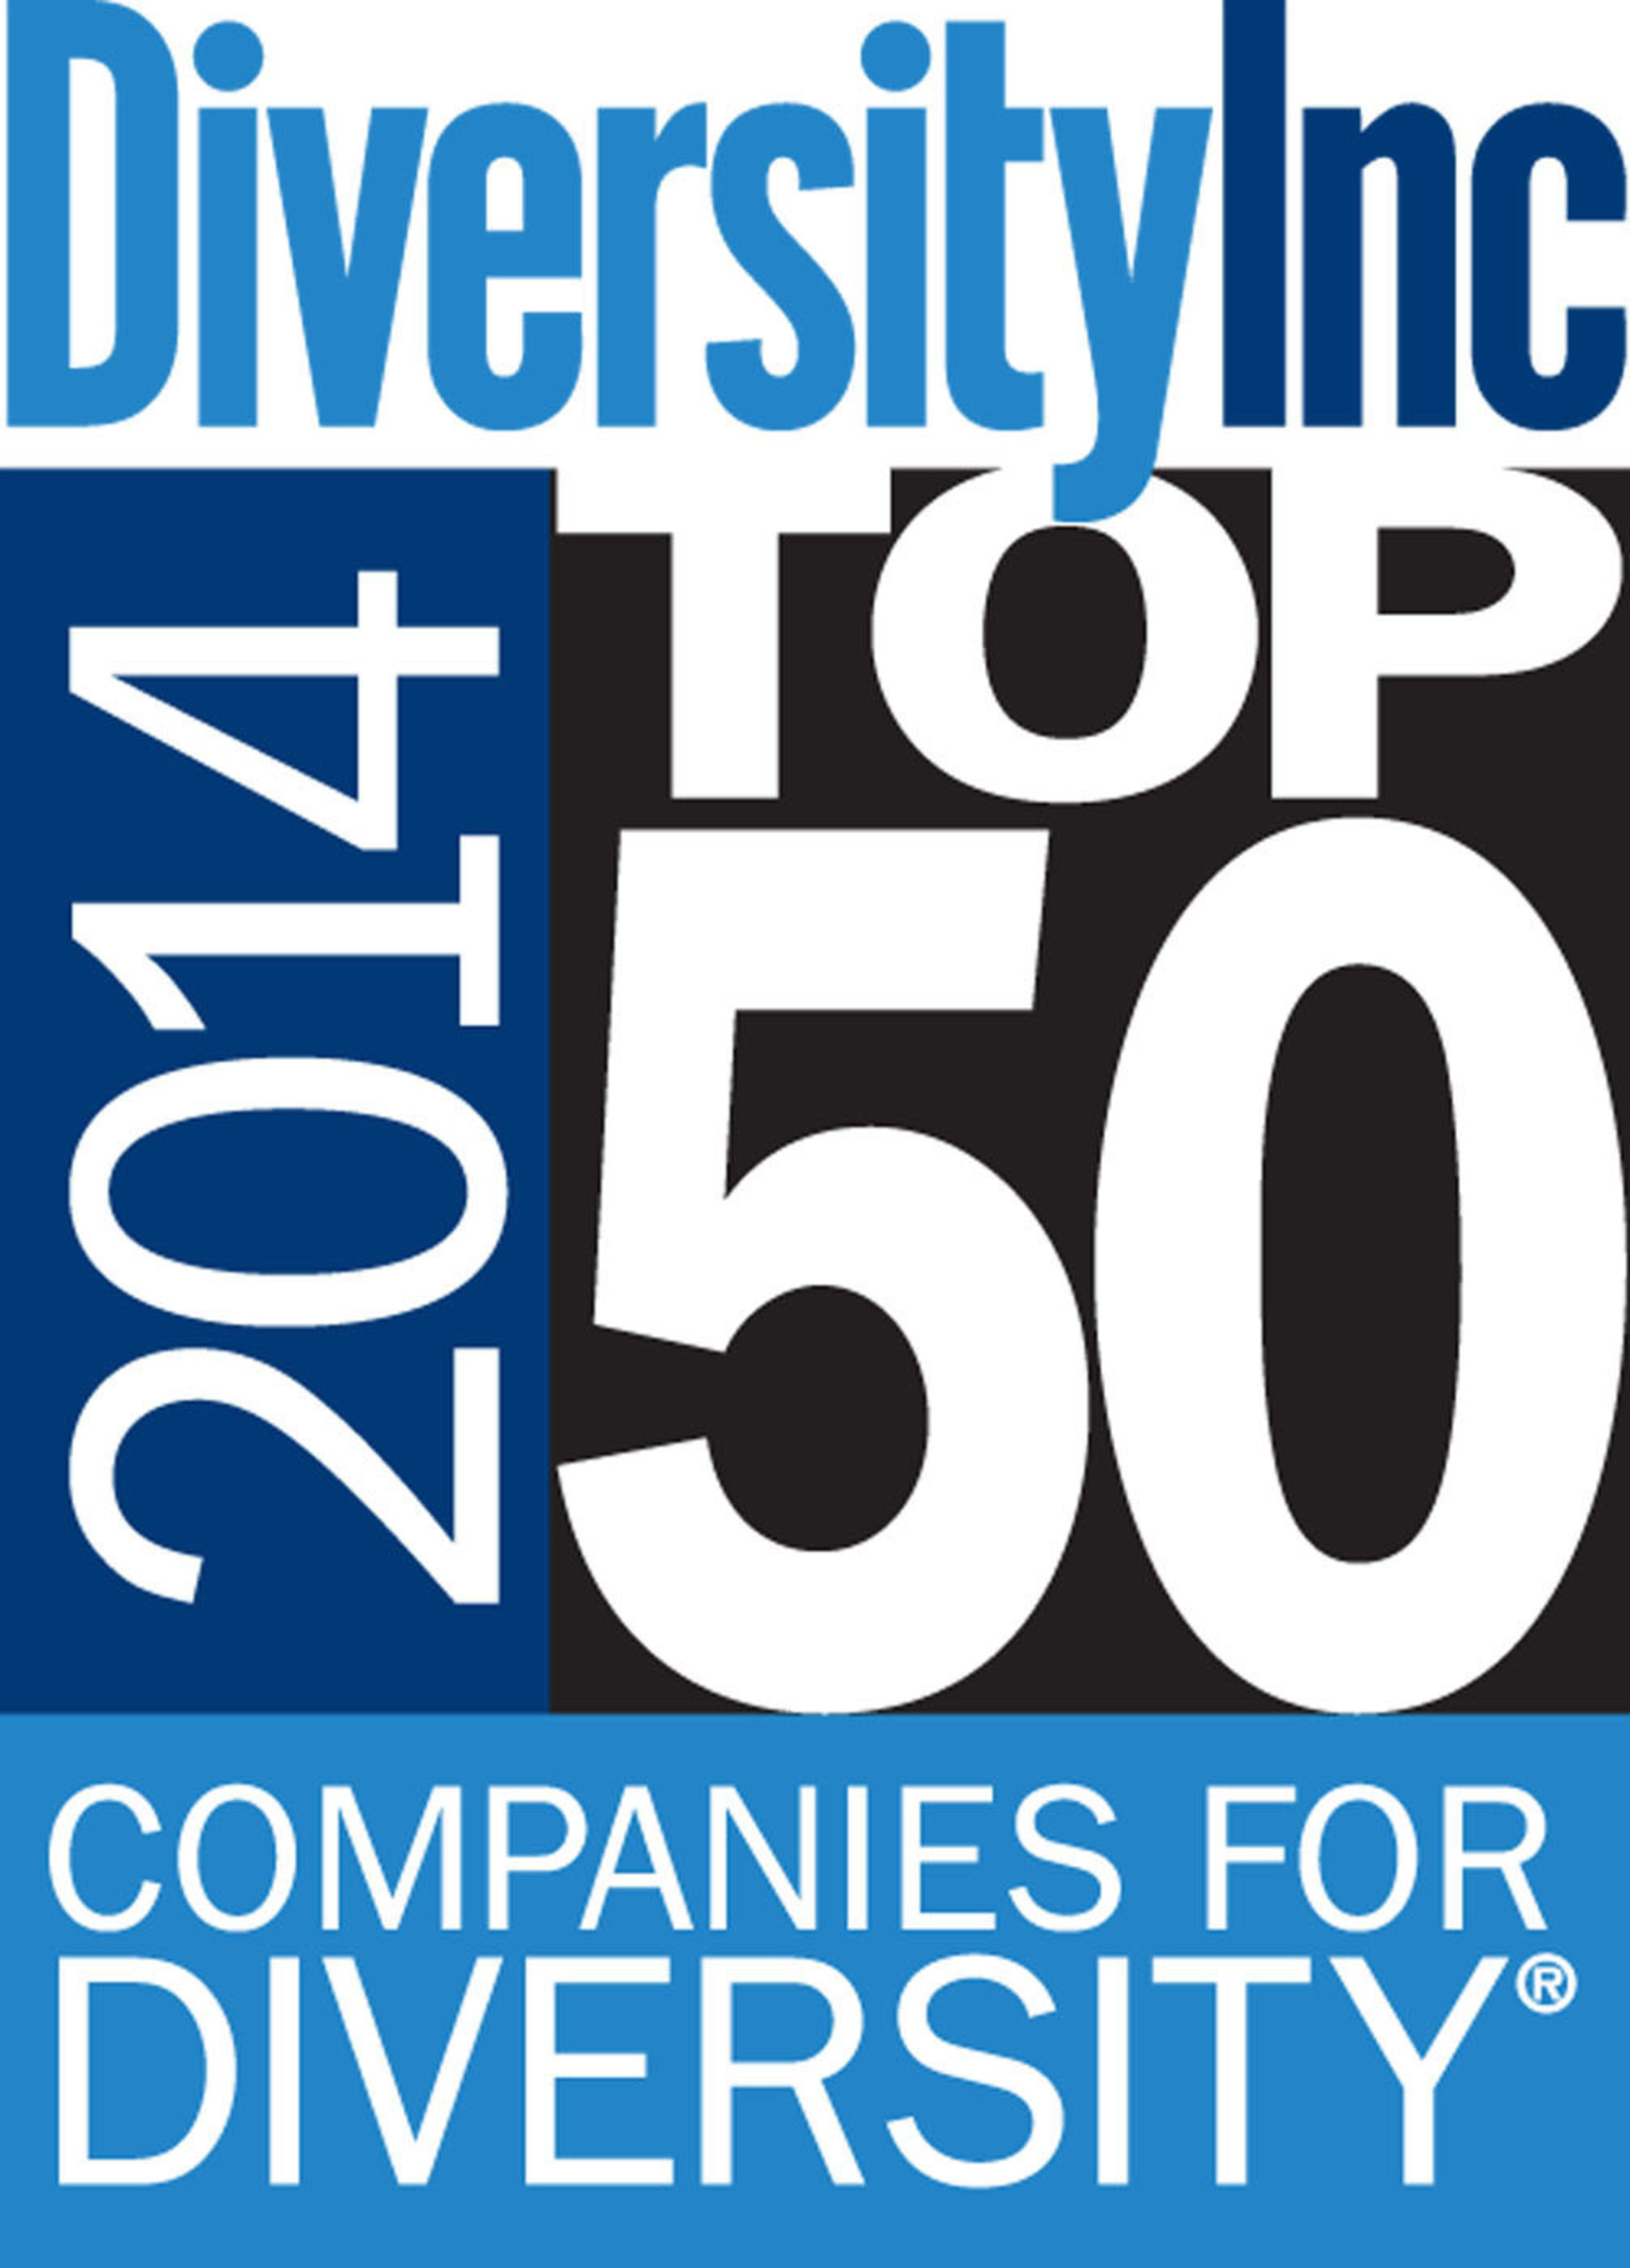 DiversityInc Top 50 Companies for Diversity for 2014 (PRNewsFoto/DiversityInc)